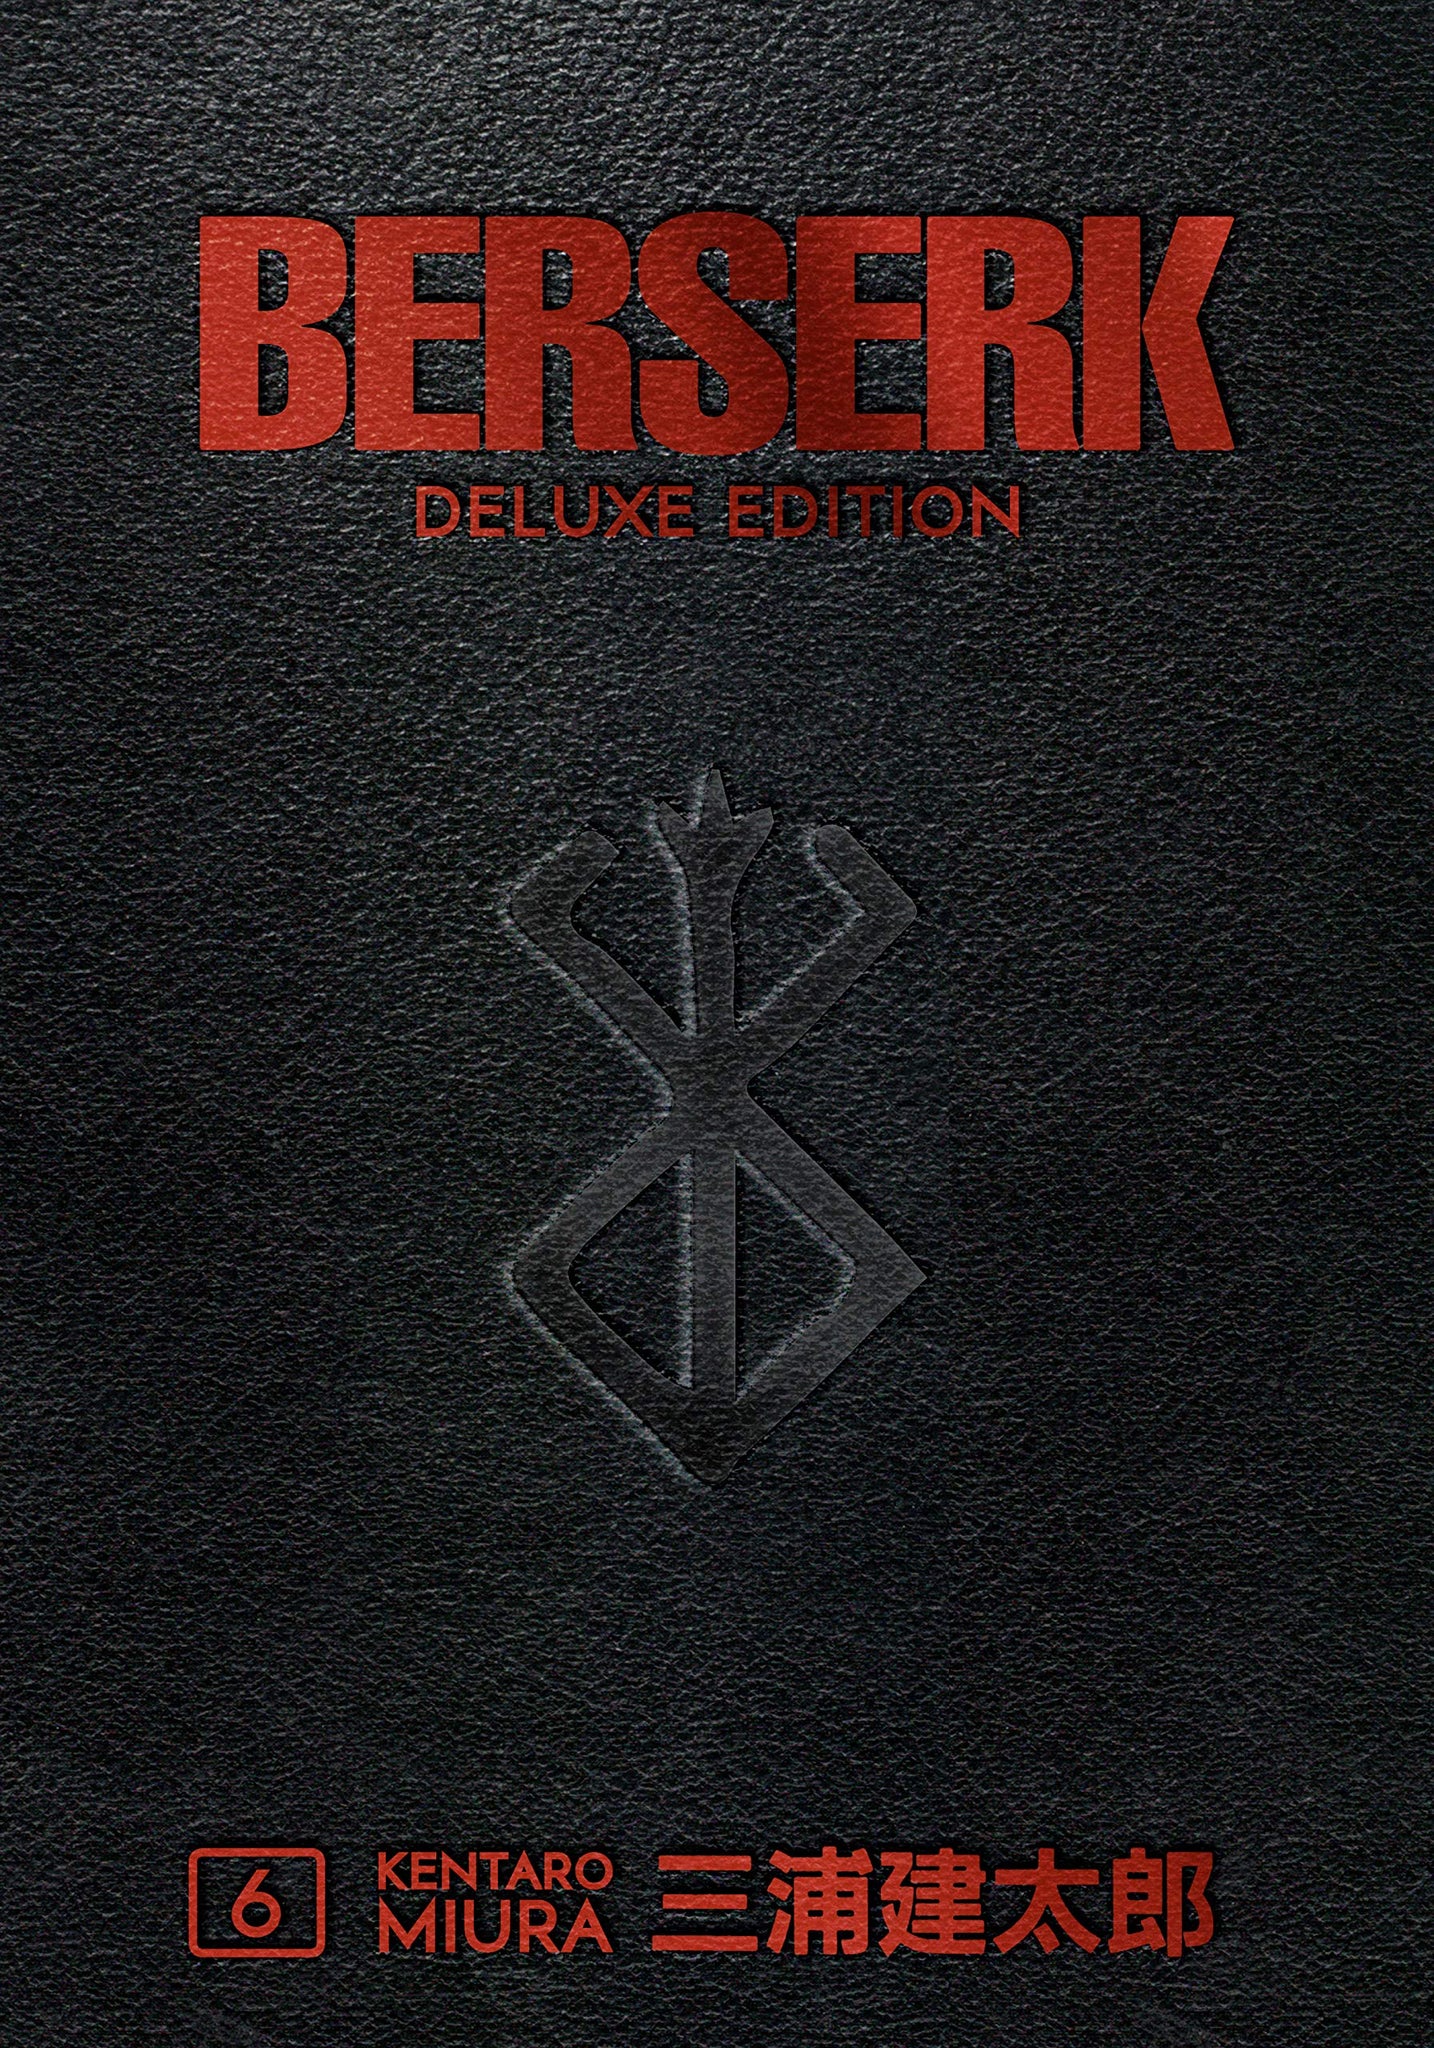 Berserk Deluxe Volume 6 - Hardback